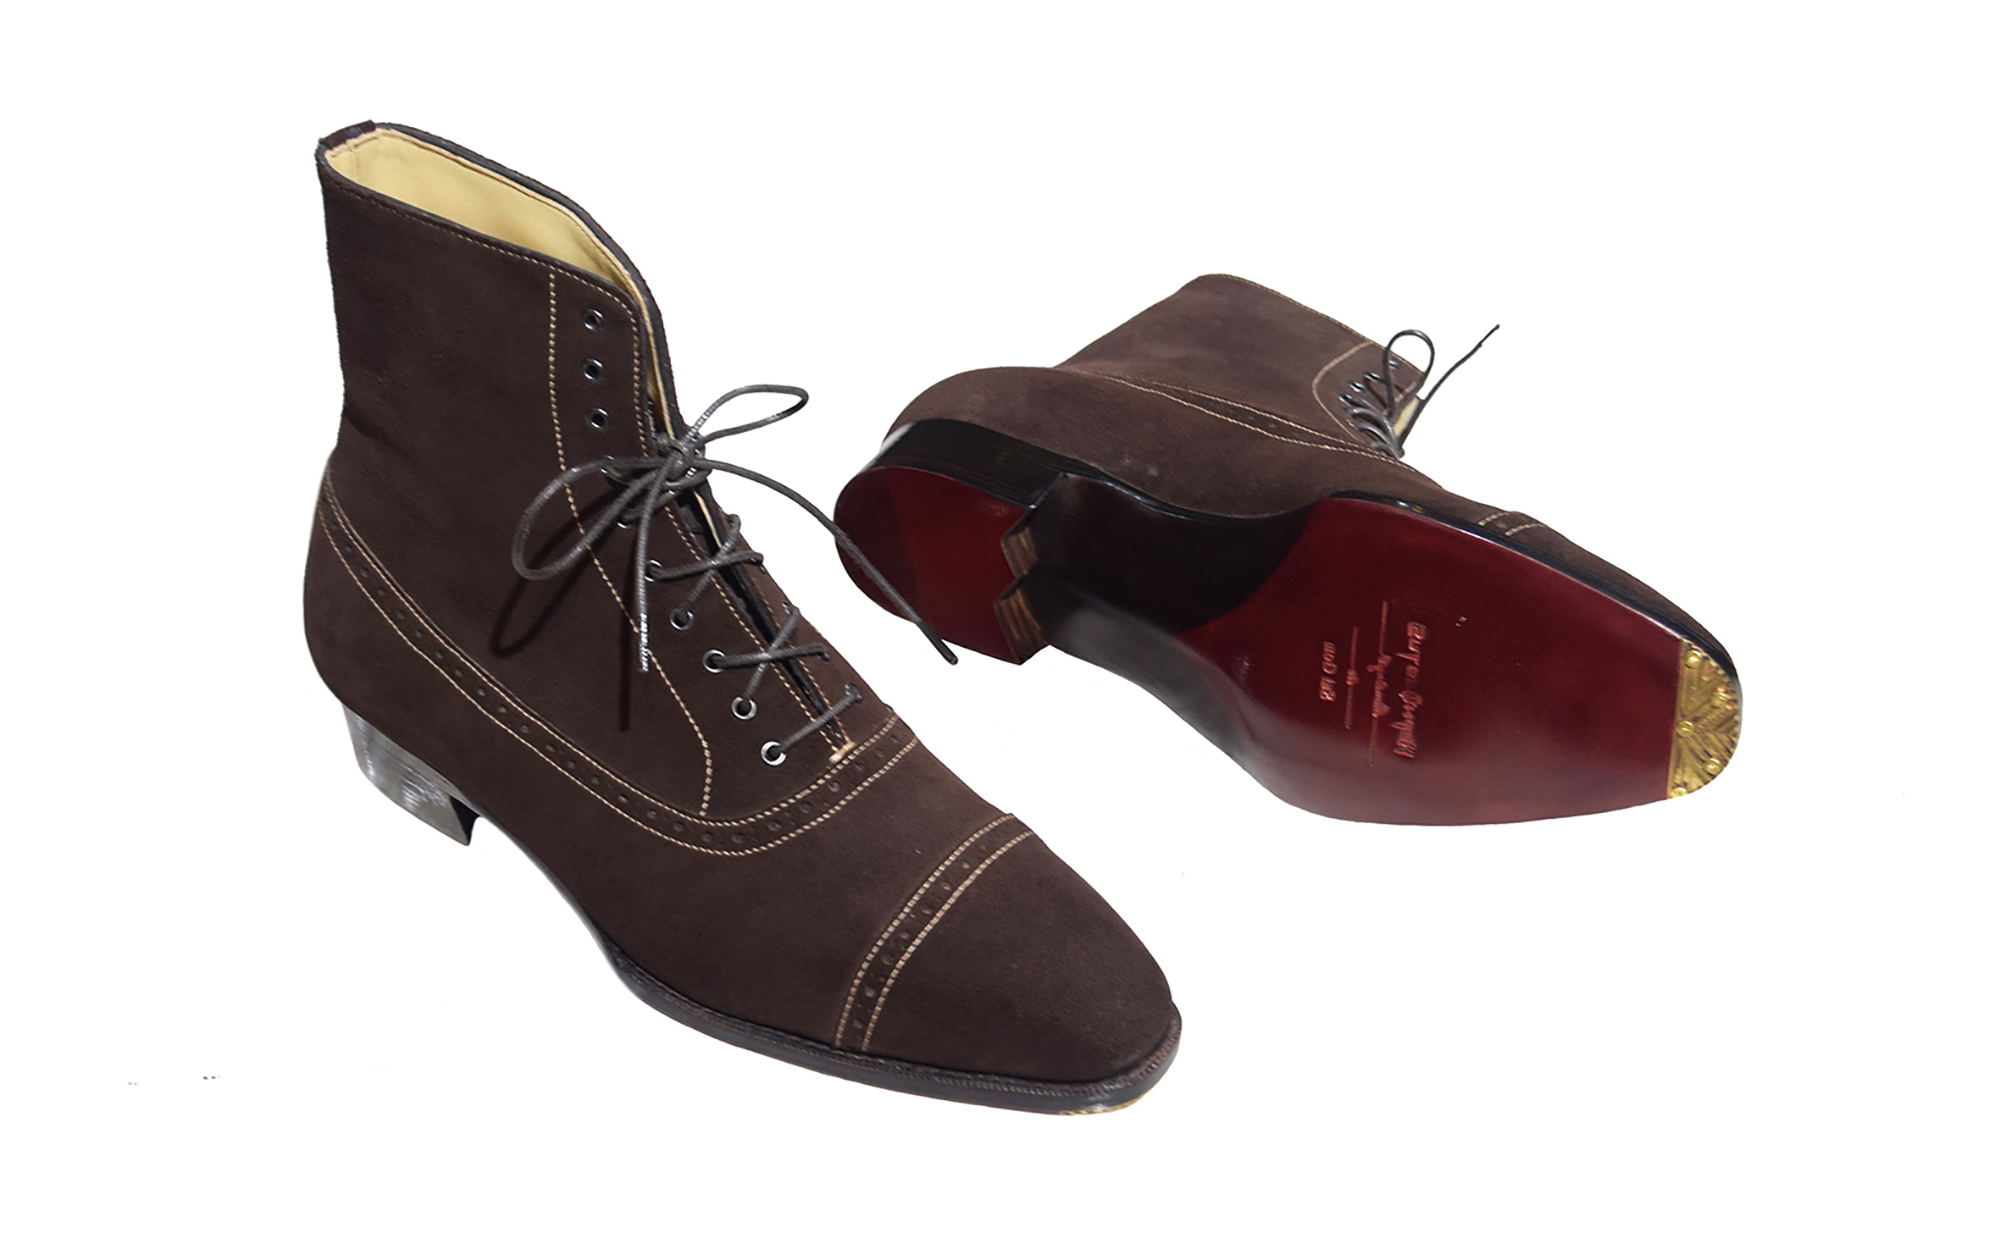 MTO Balmoral Captoe boots